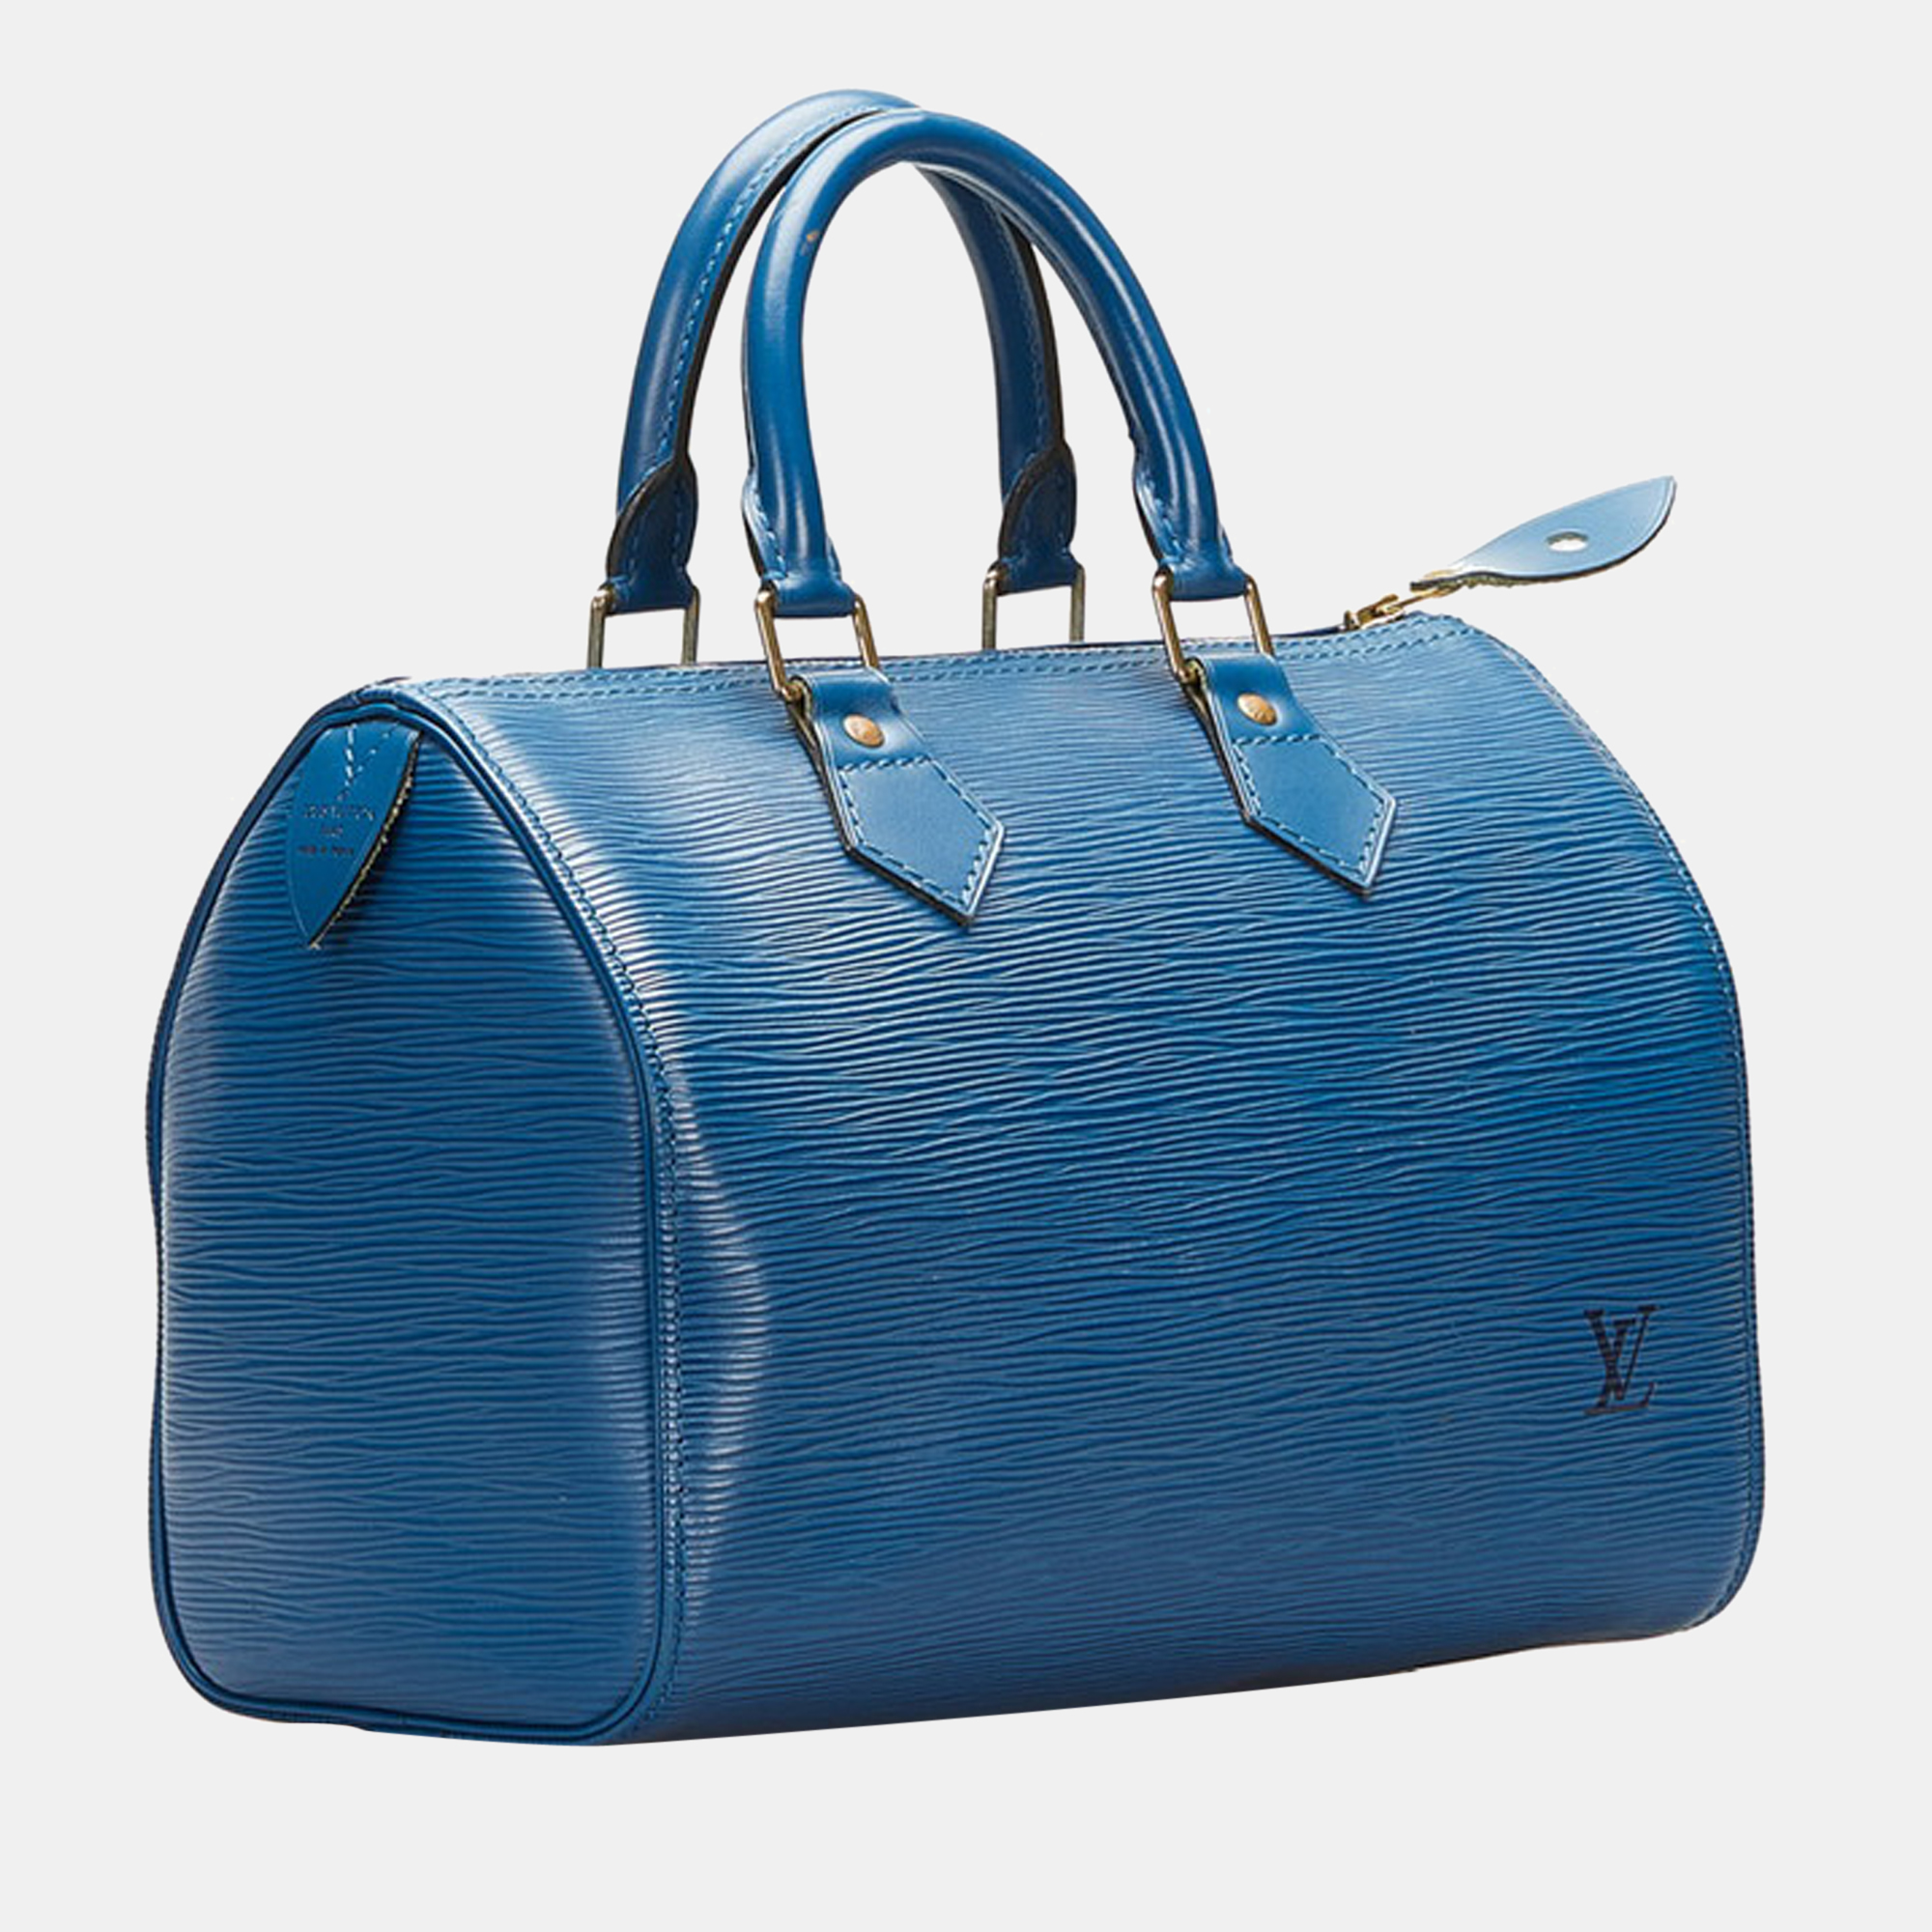 

Louis Vuitton Blue Epi Leather Speedy 25 Satchel Bag